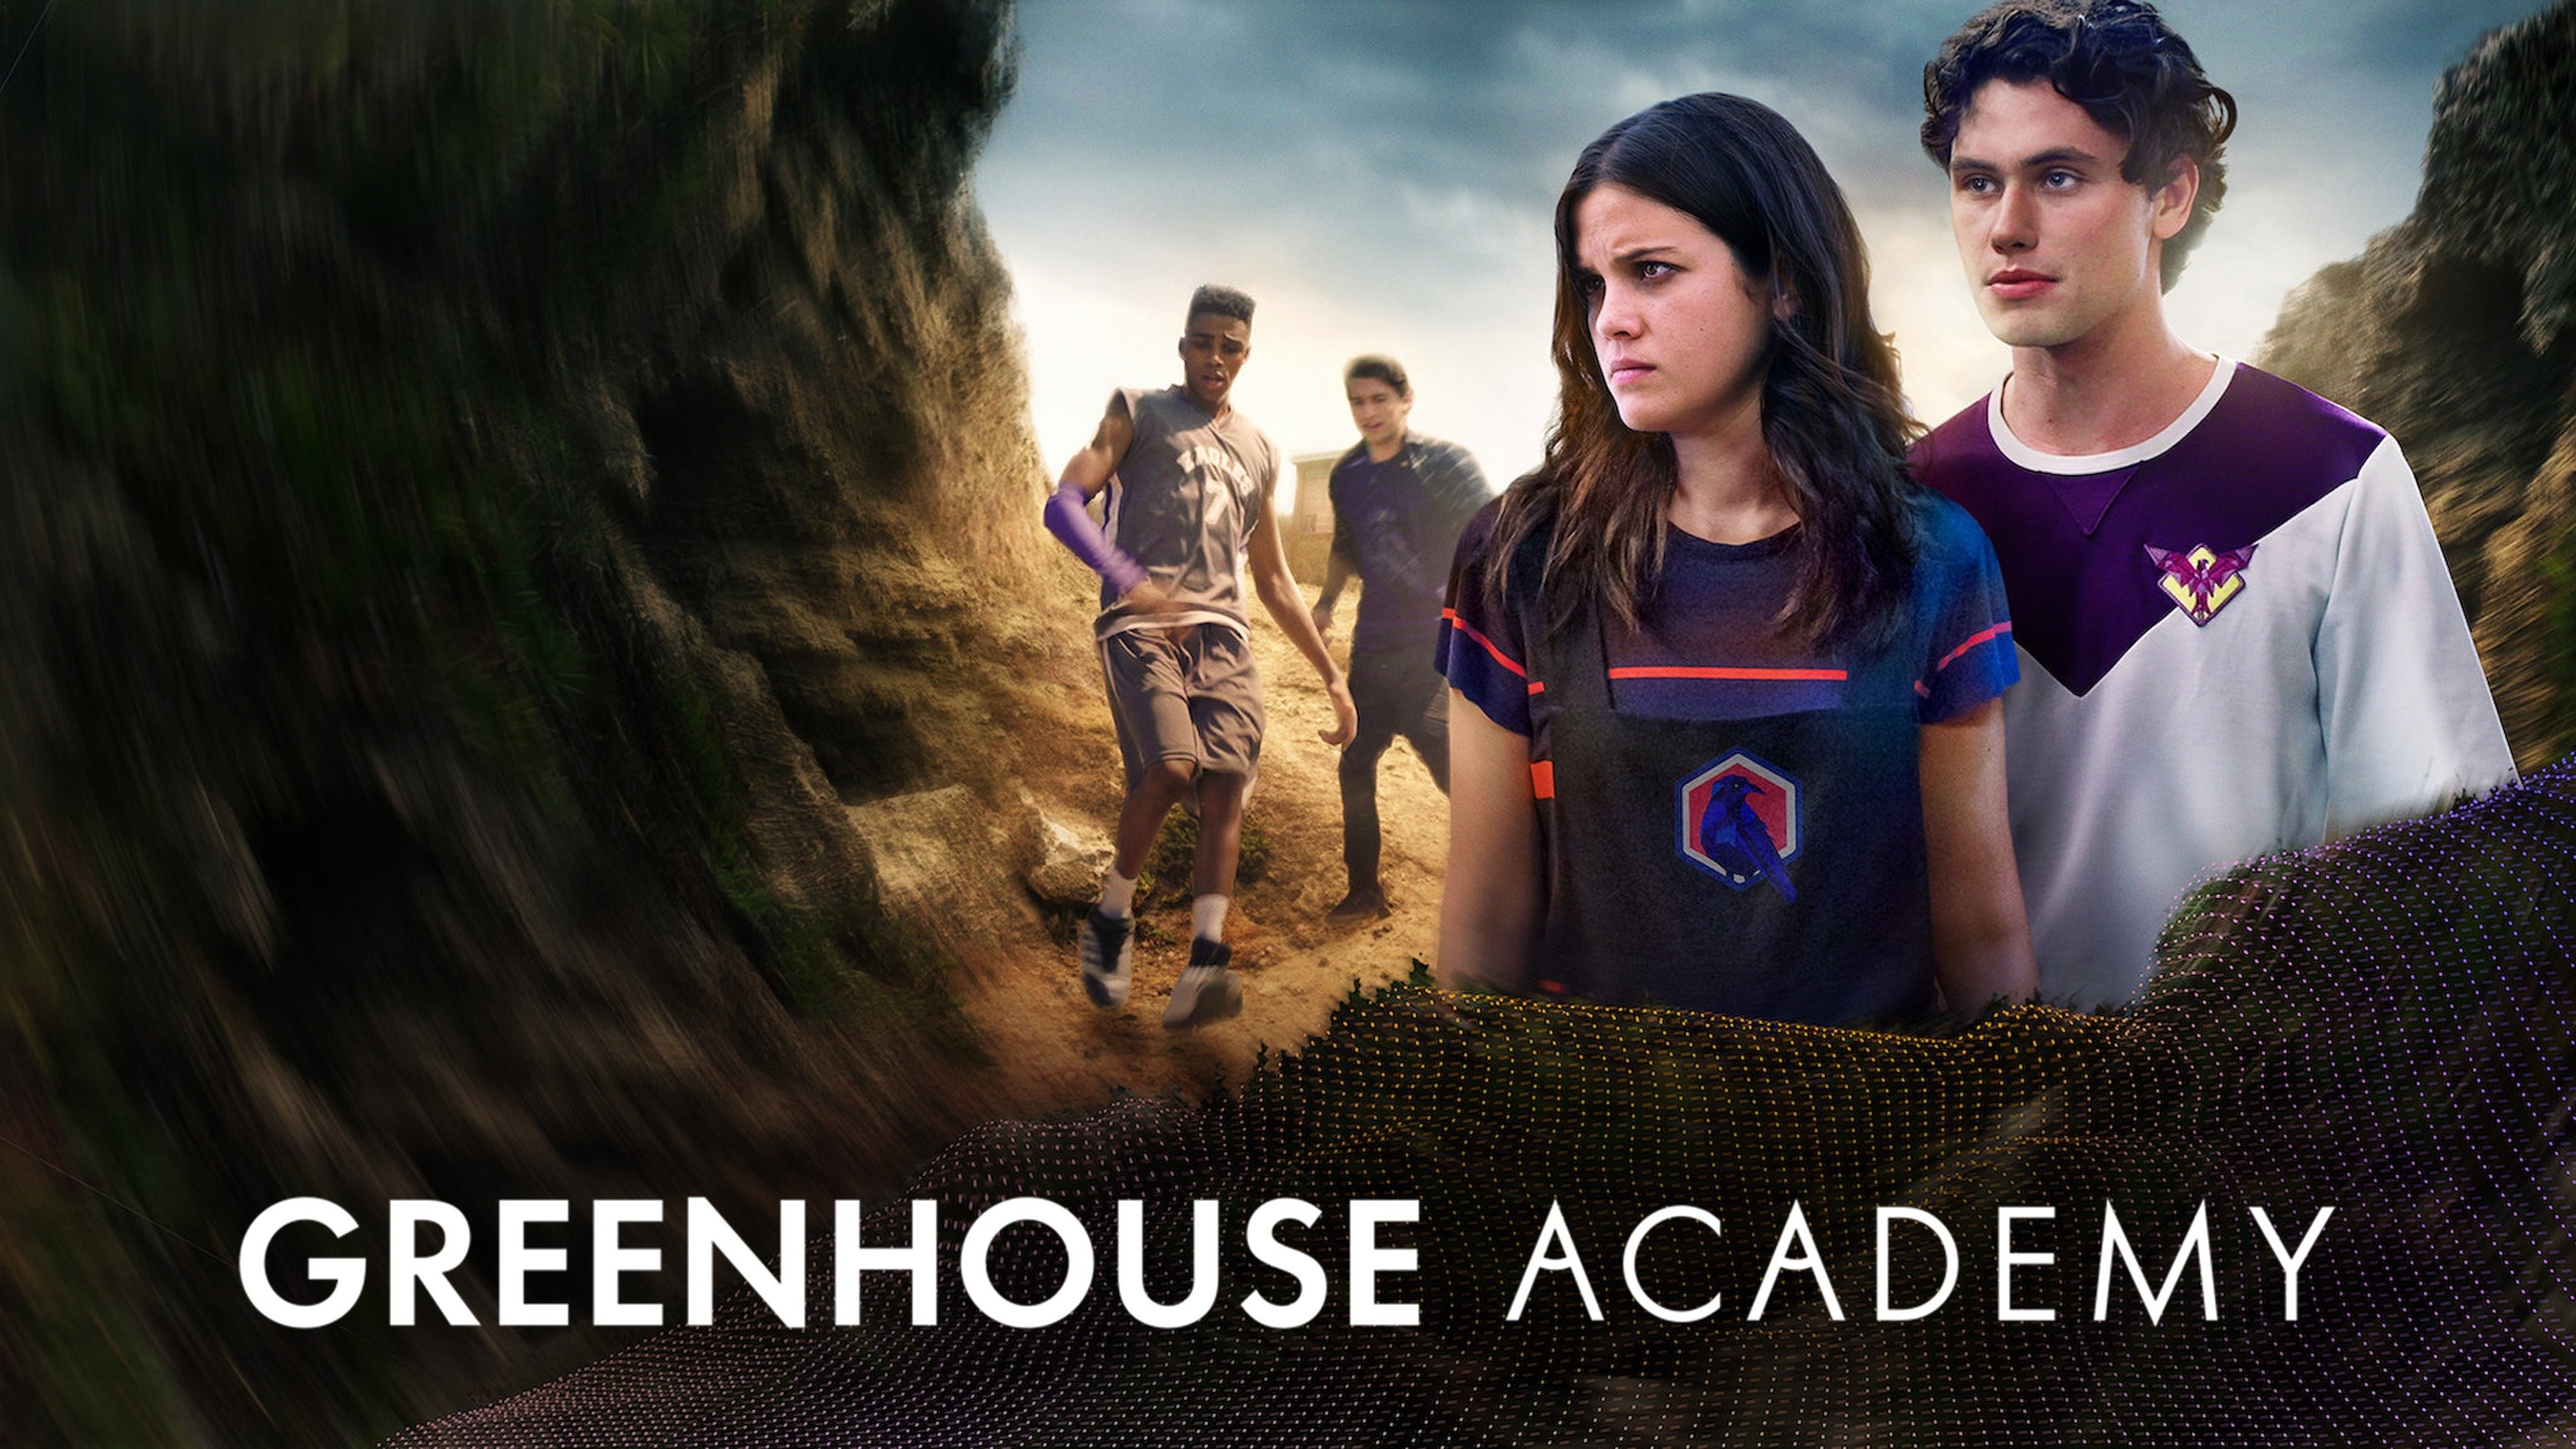 Greenhouse Academy The Hike (TV Episode 2019) - IMDb